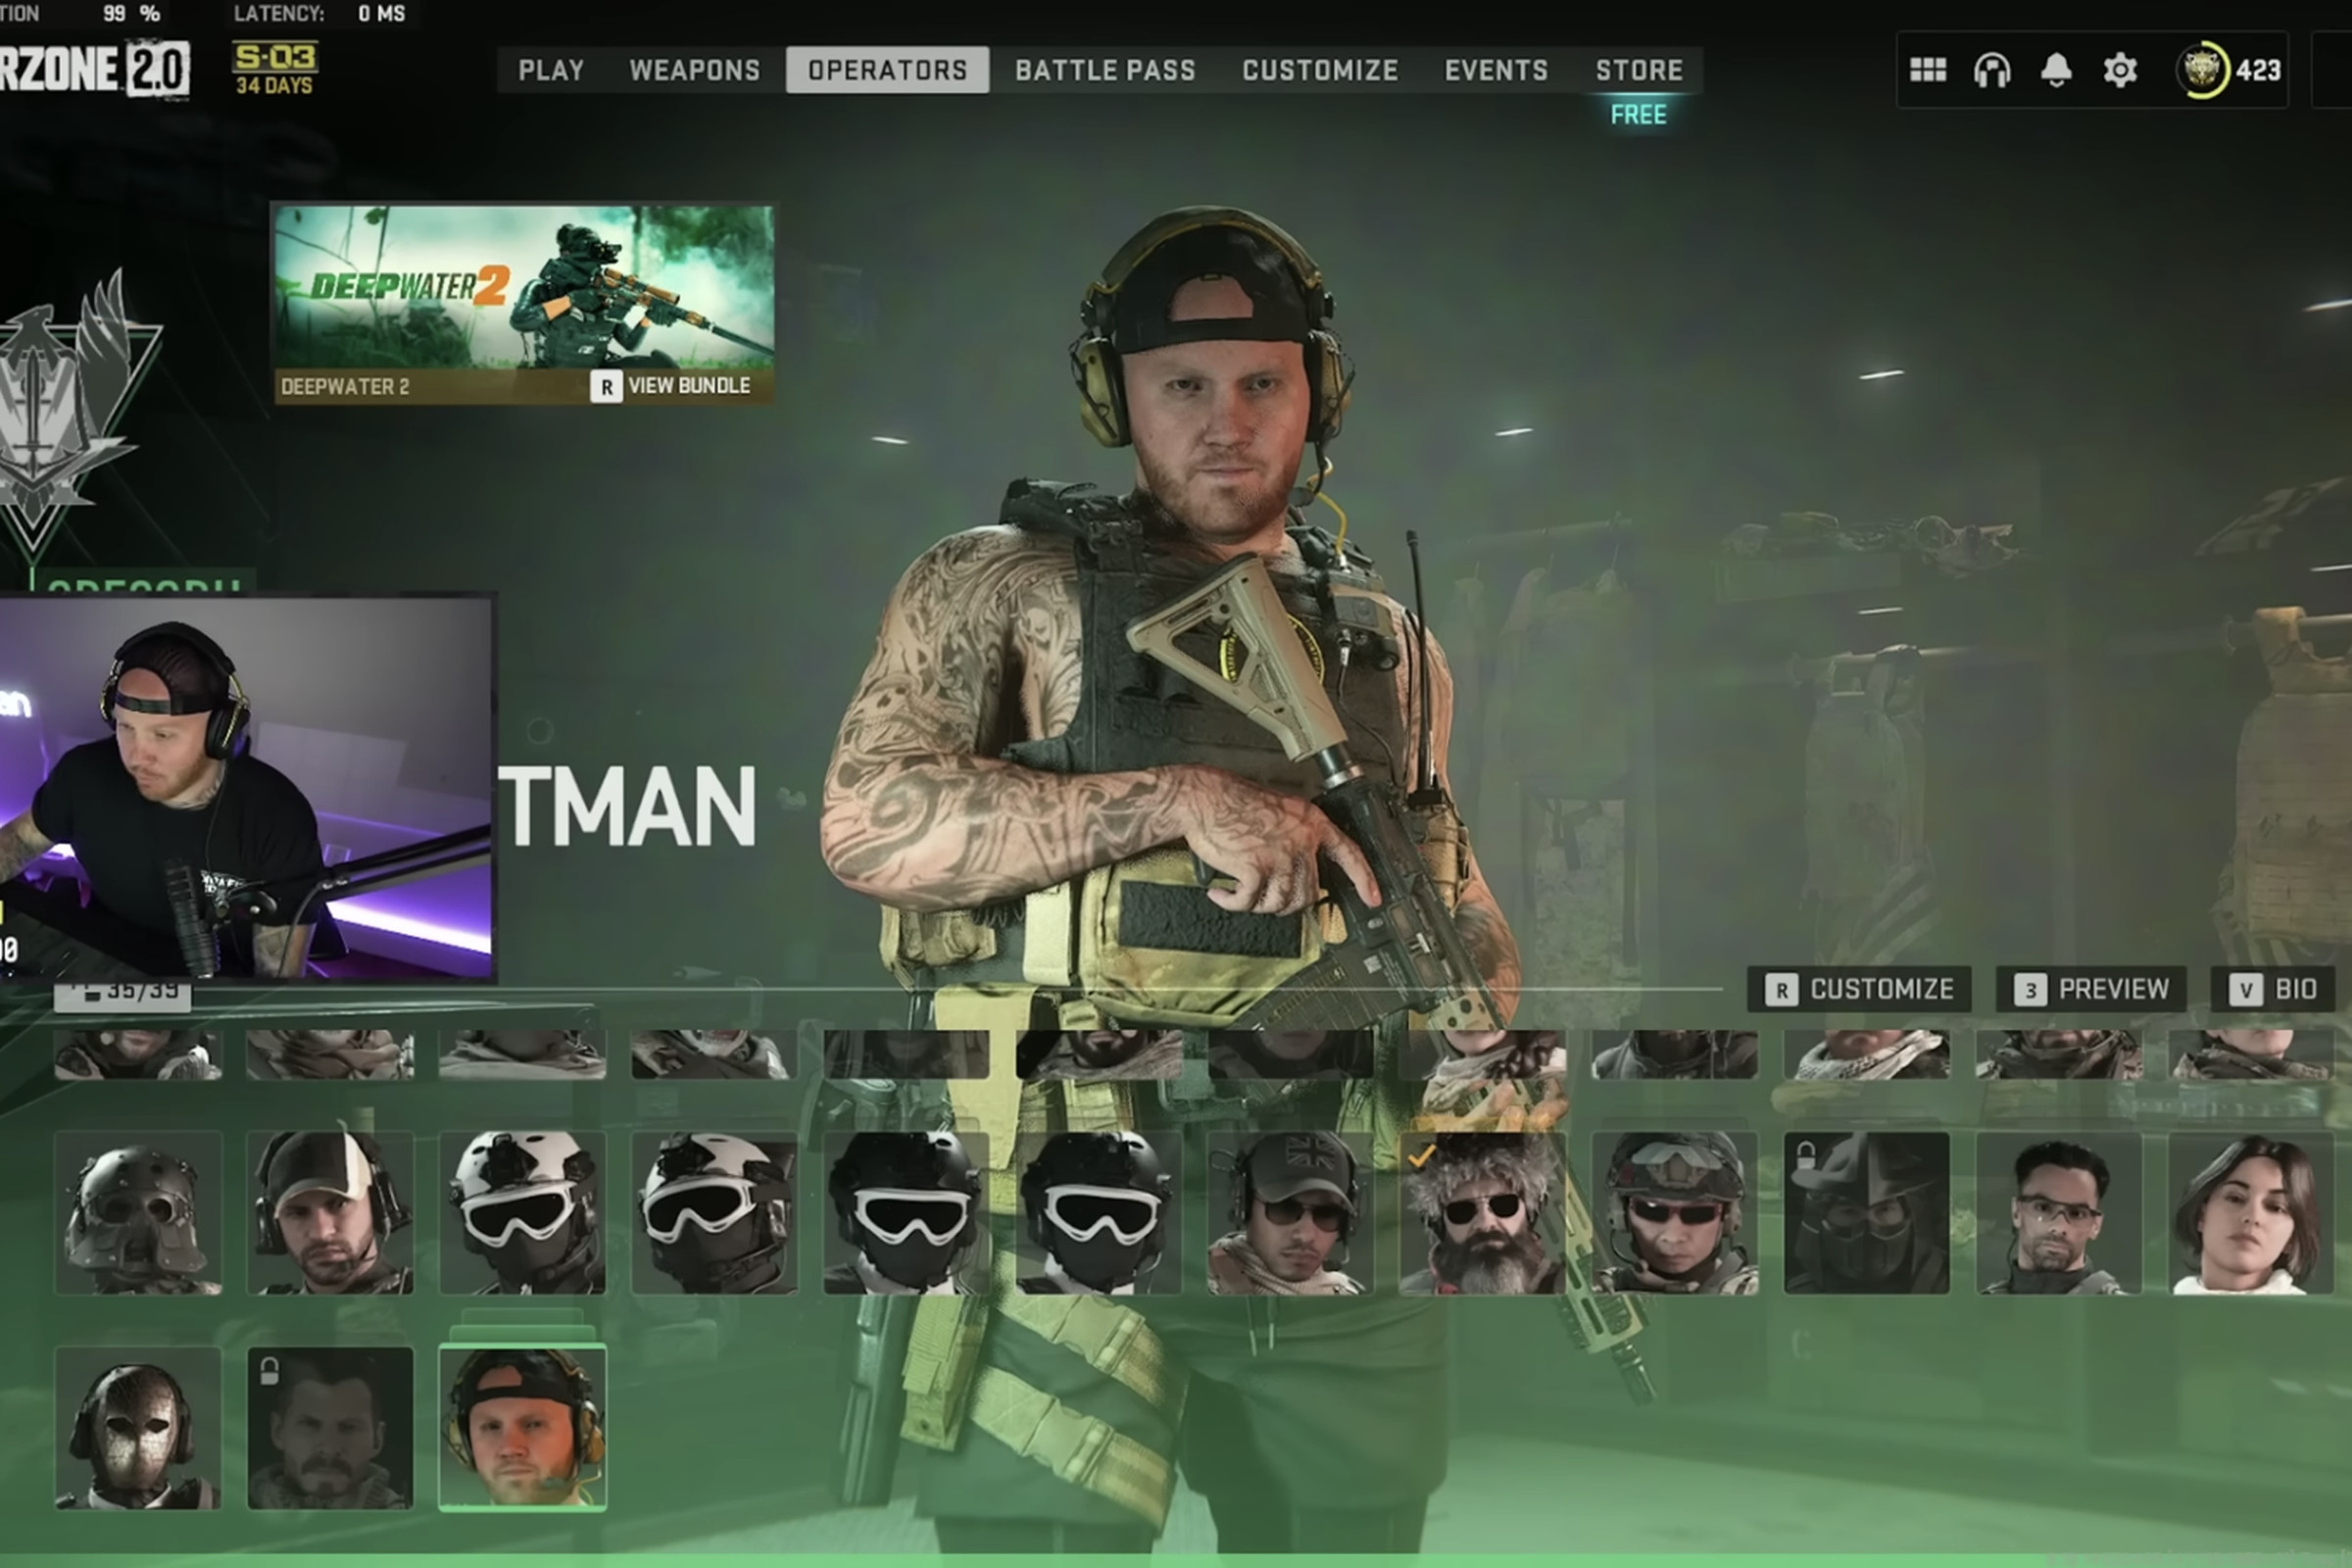 Screenshot from a Timthetatman YouTube video highlighting the streamer’s Call of Duty operator bundle